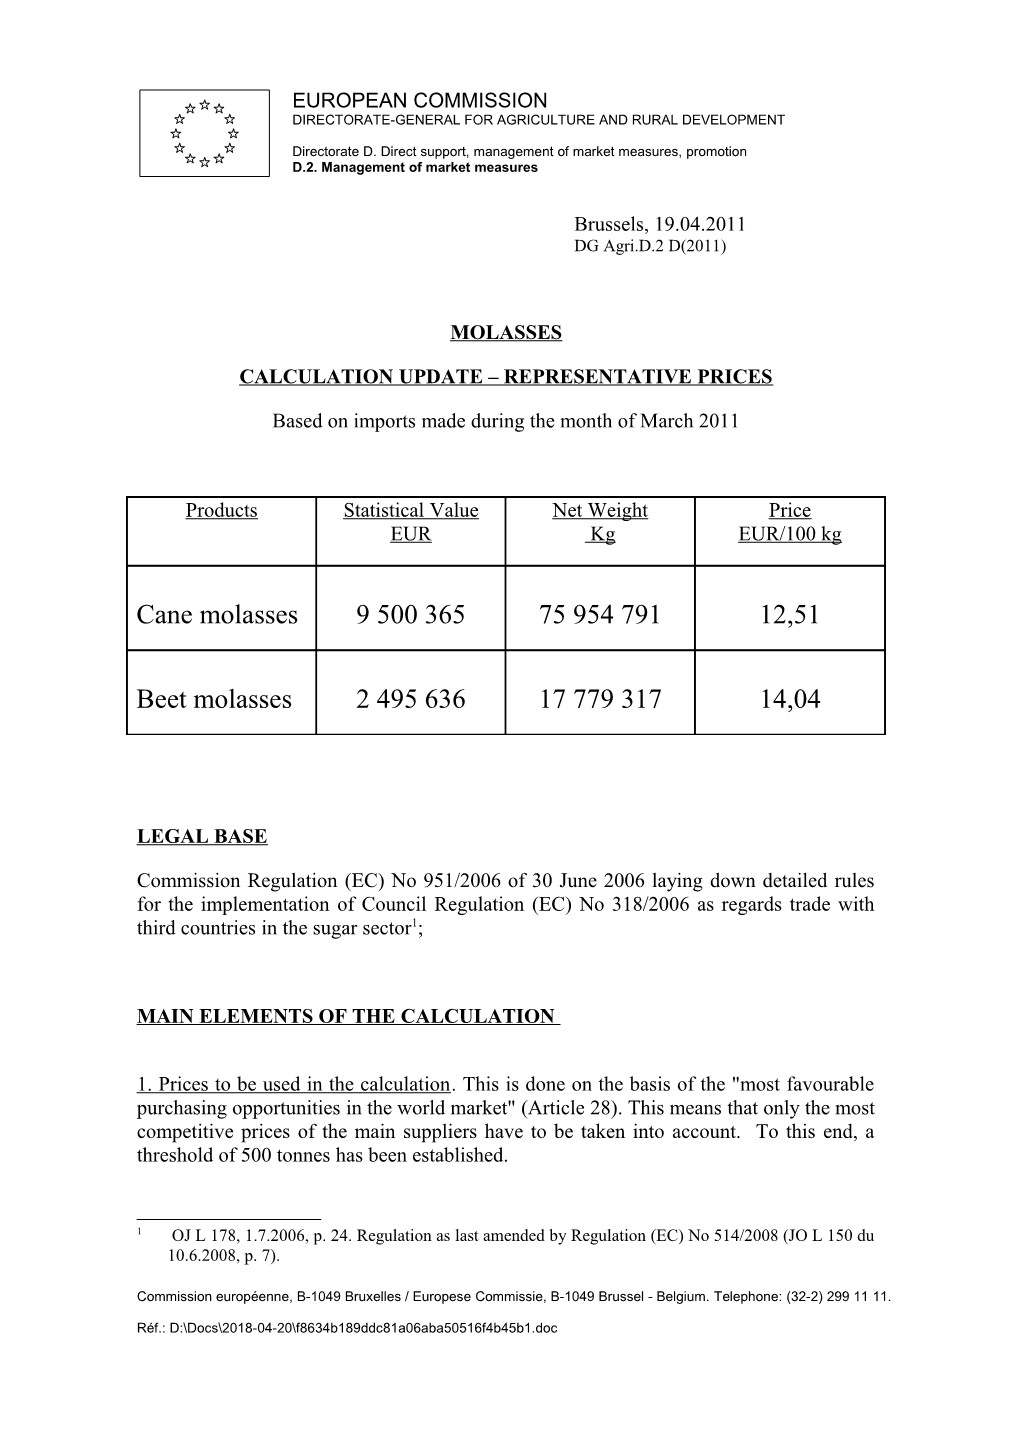 Calculation Update Representative Prices